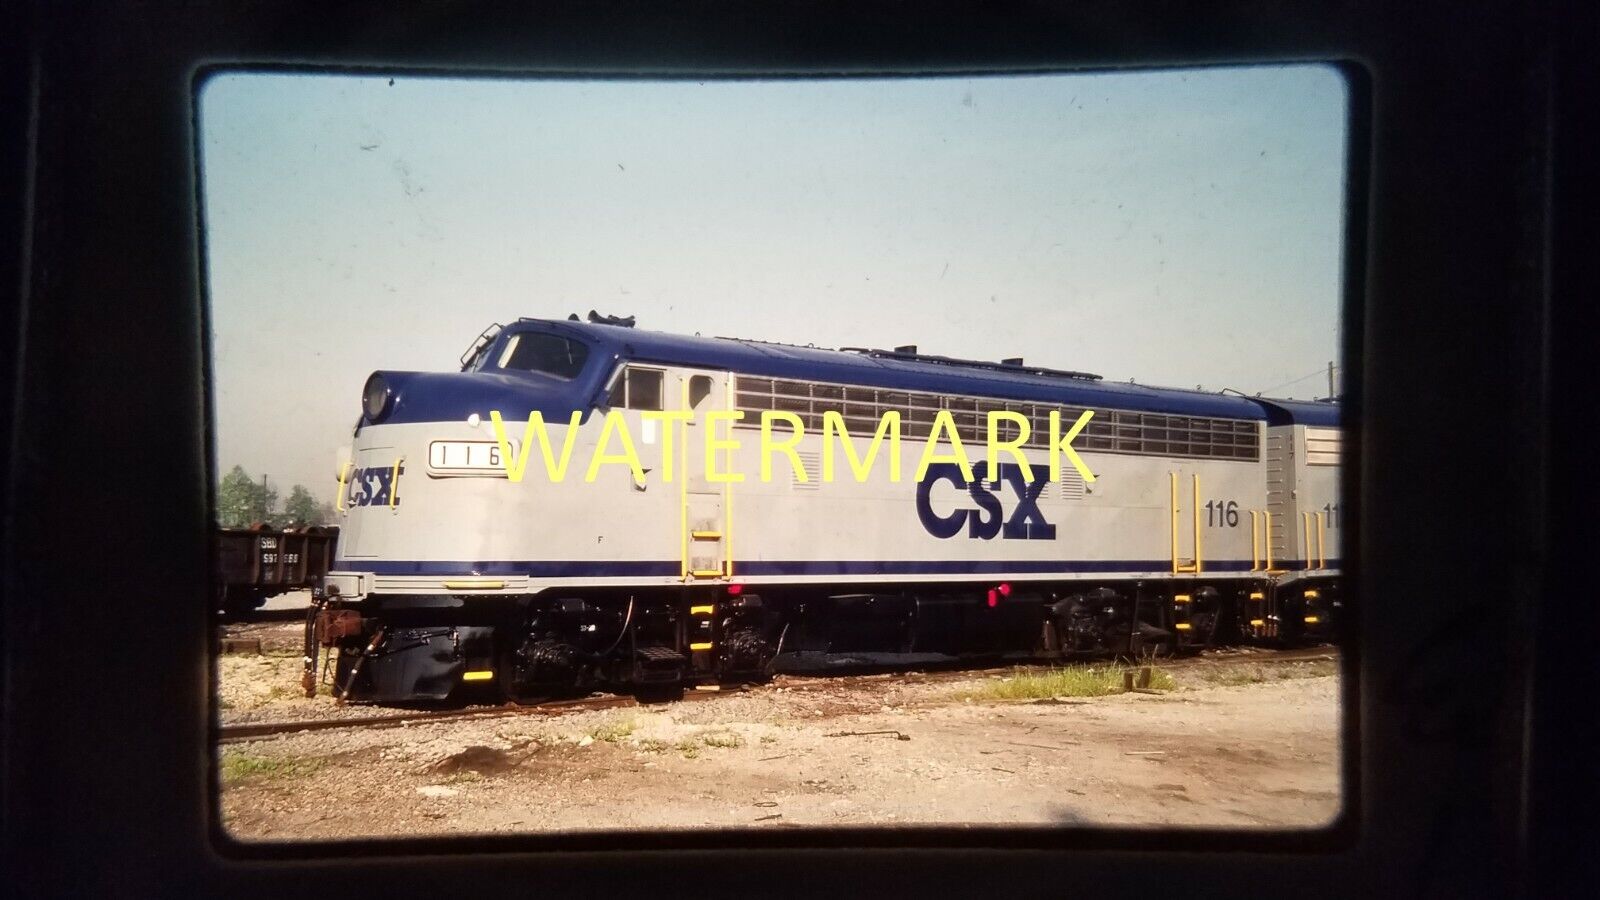 EY13 TRAIN ENGINE LOCOMOTIVE 35MM SLIDE RAILROAD CSX116 ATLANTA, GA 1987